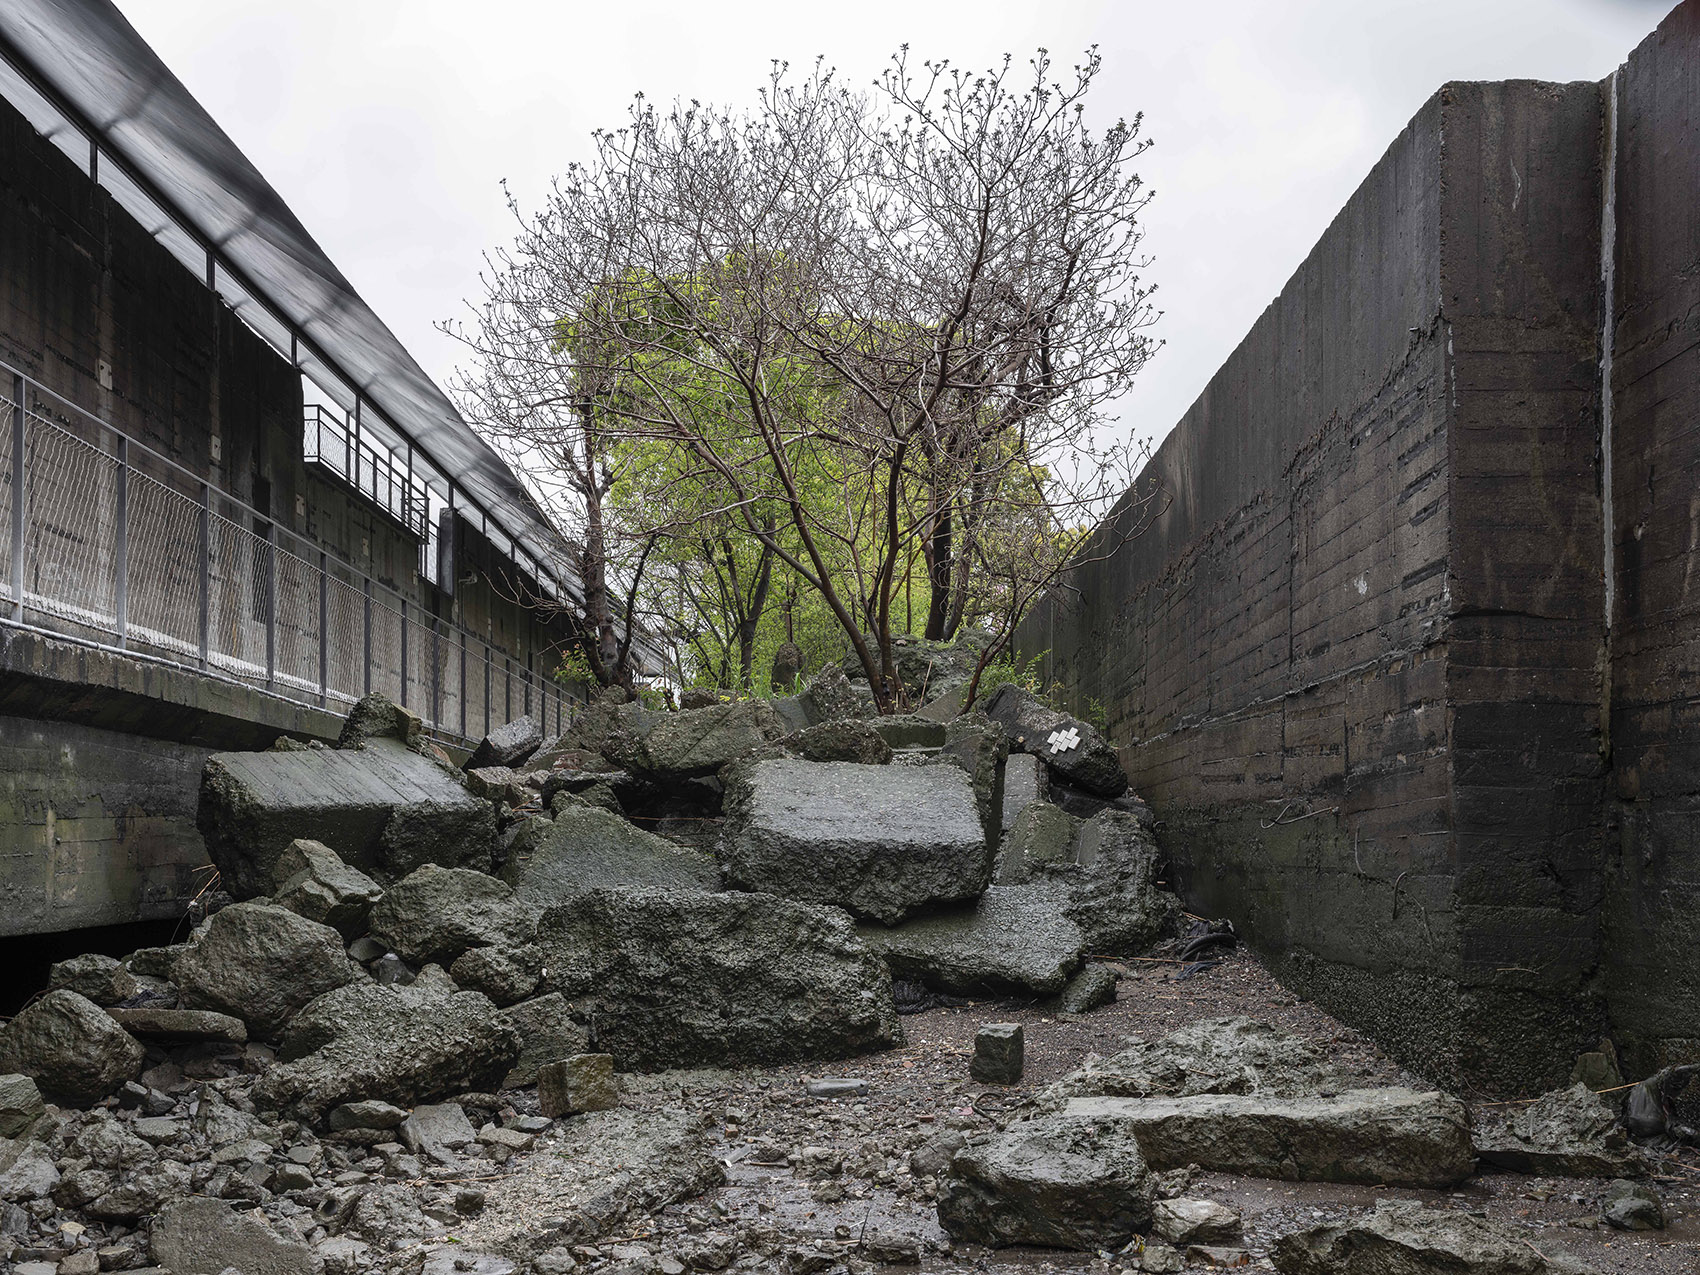 032-riverside-passage-yang-pu-riverfront-urban-space-renovation-china-by-atelier.jpg